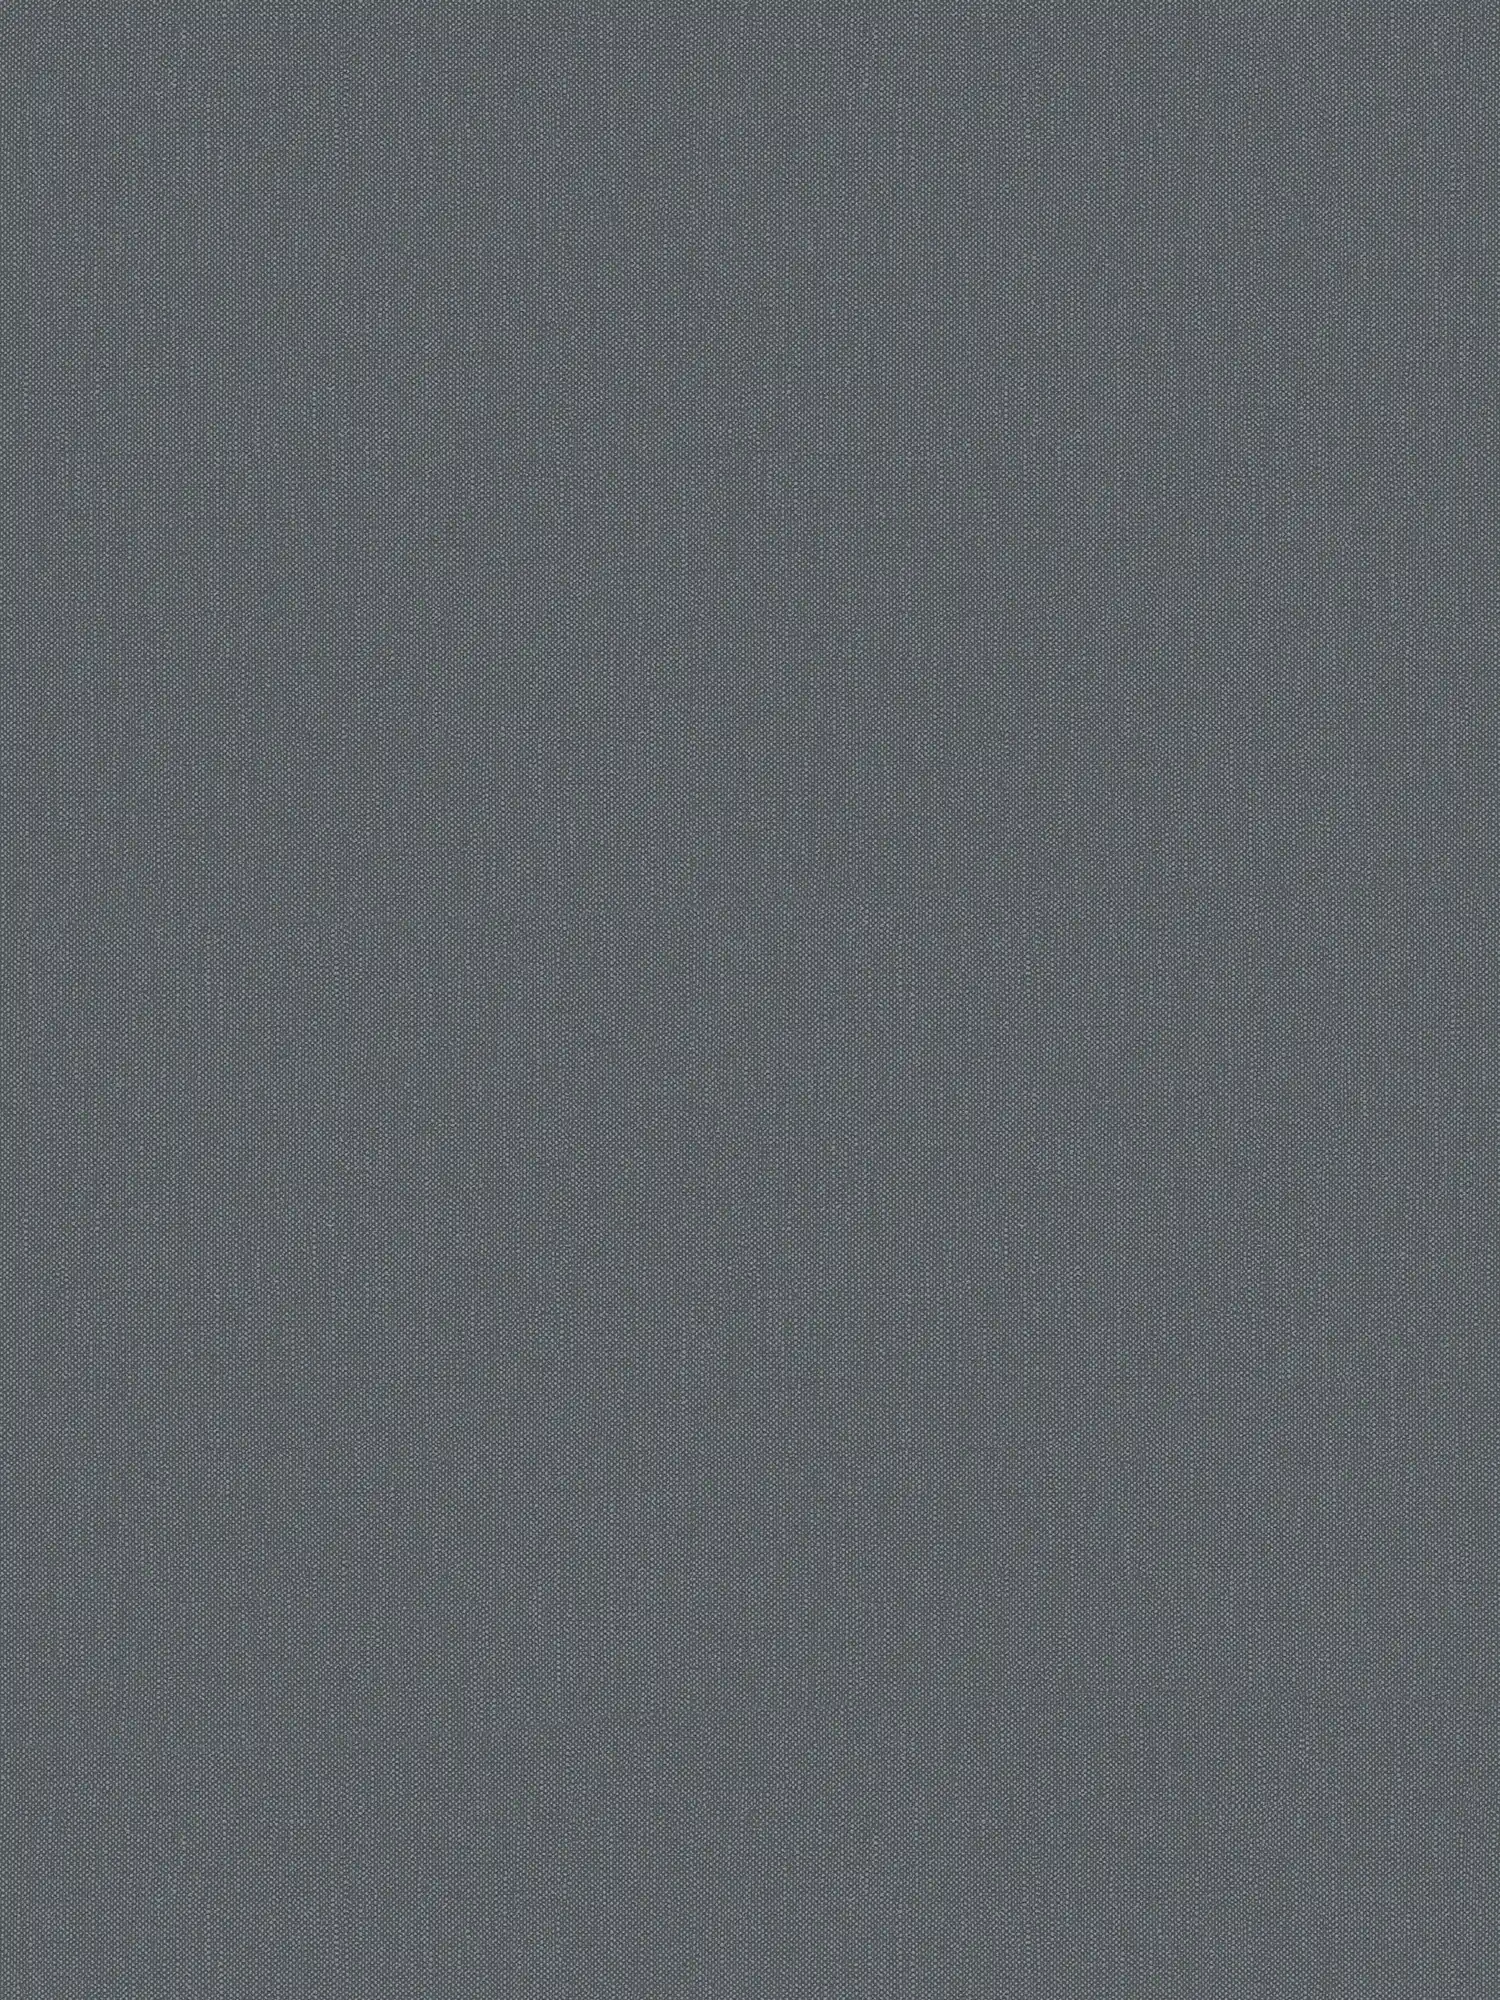 Non-woven wallpaper anthracite with textile texture - grey
